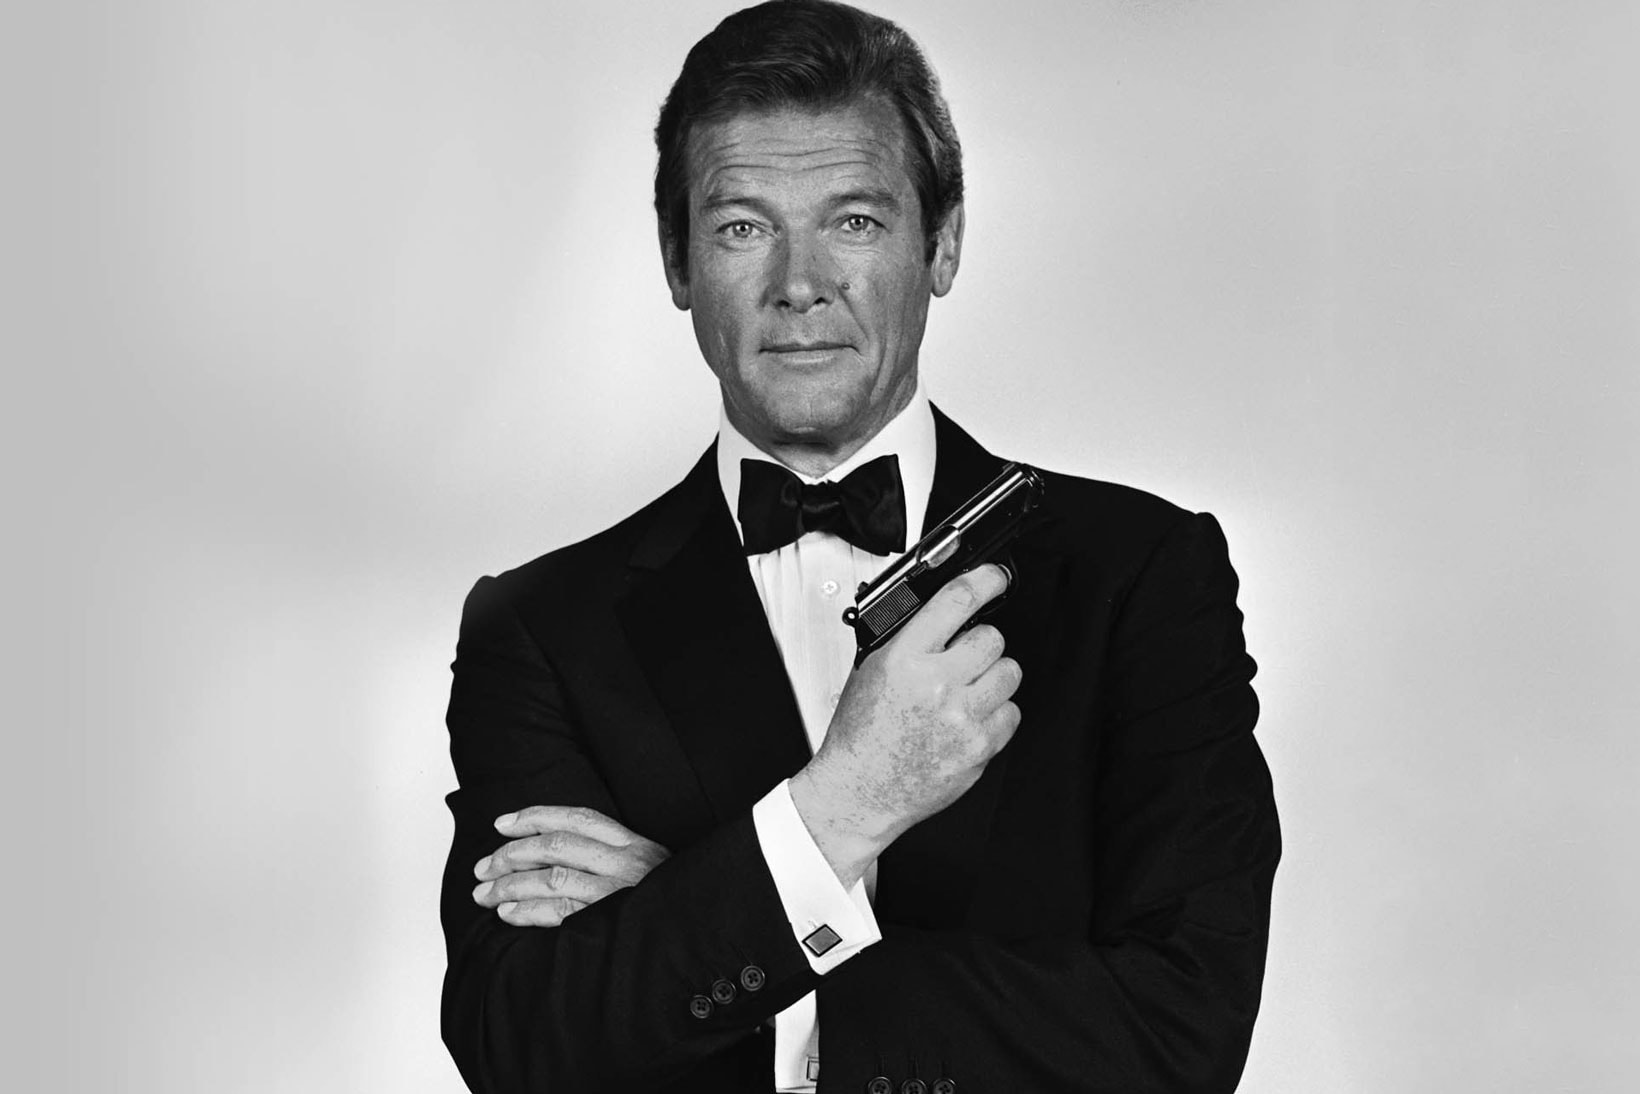 Roger Moore 007 James Bond Actor Died